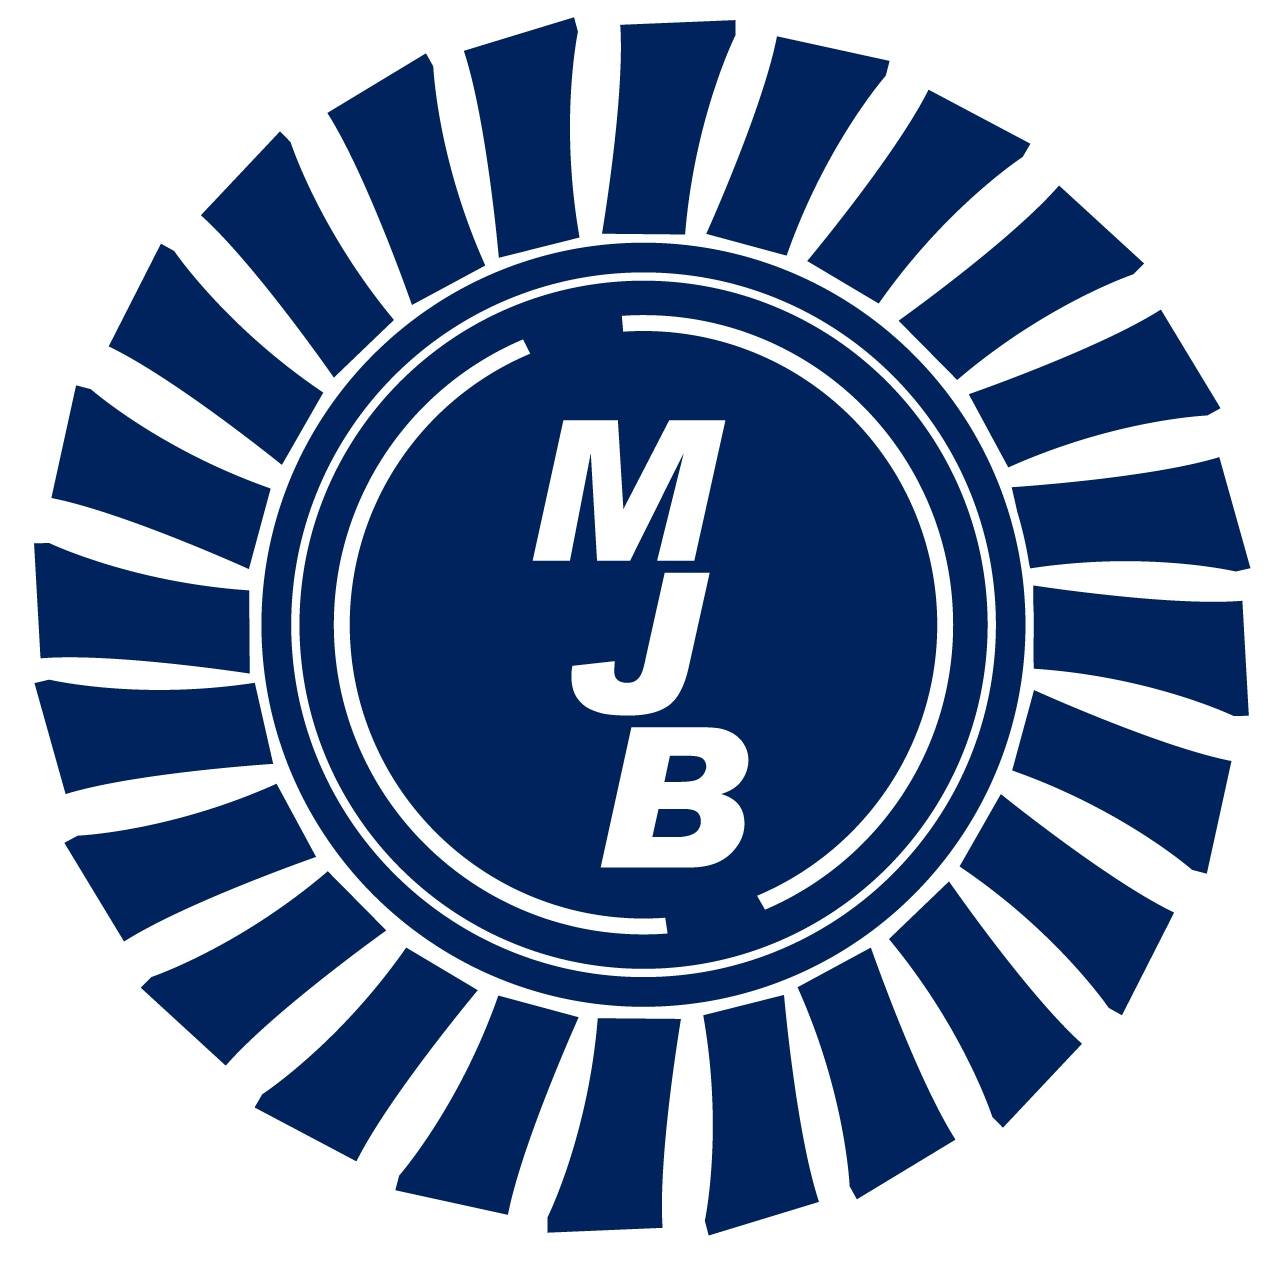 MJB International